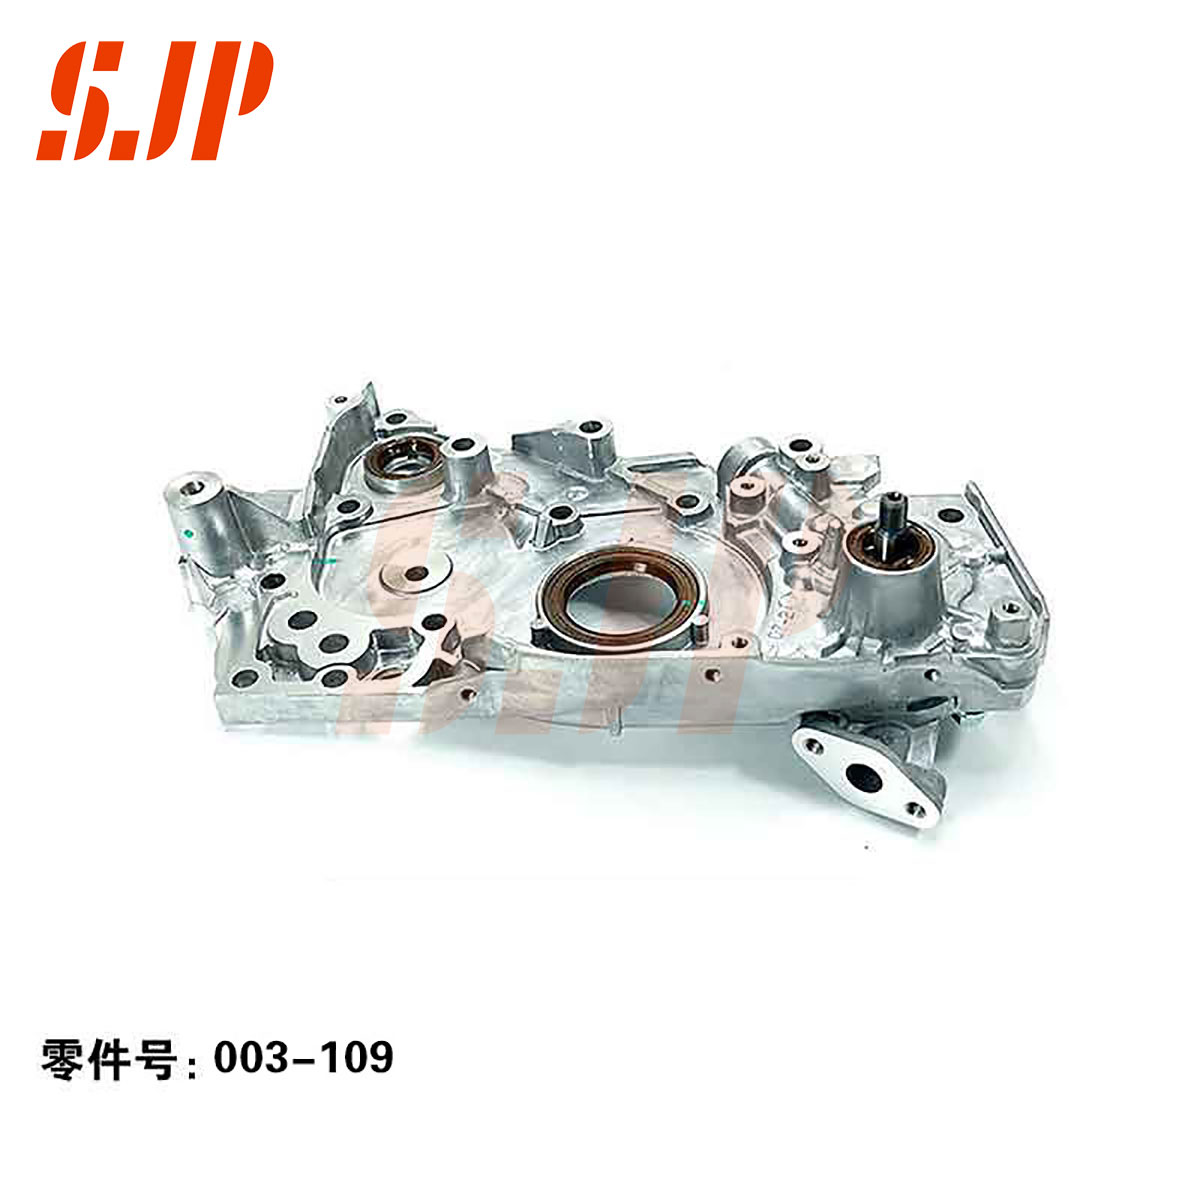 SJ-003-109 Oil Pump For Mitsubishi 4G63T/4G63/64 rear wheel drive